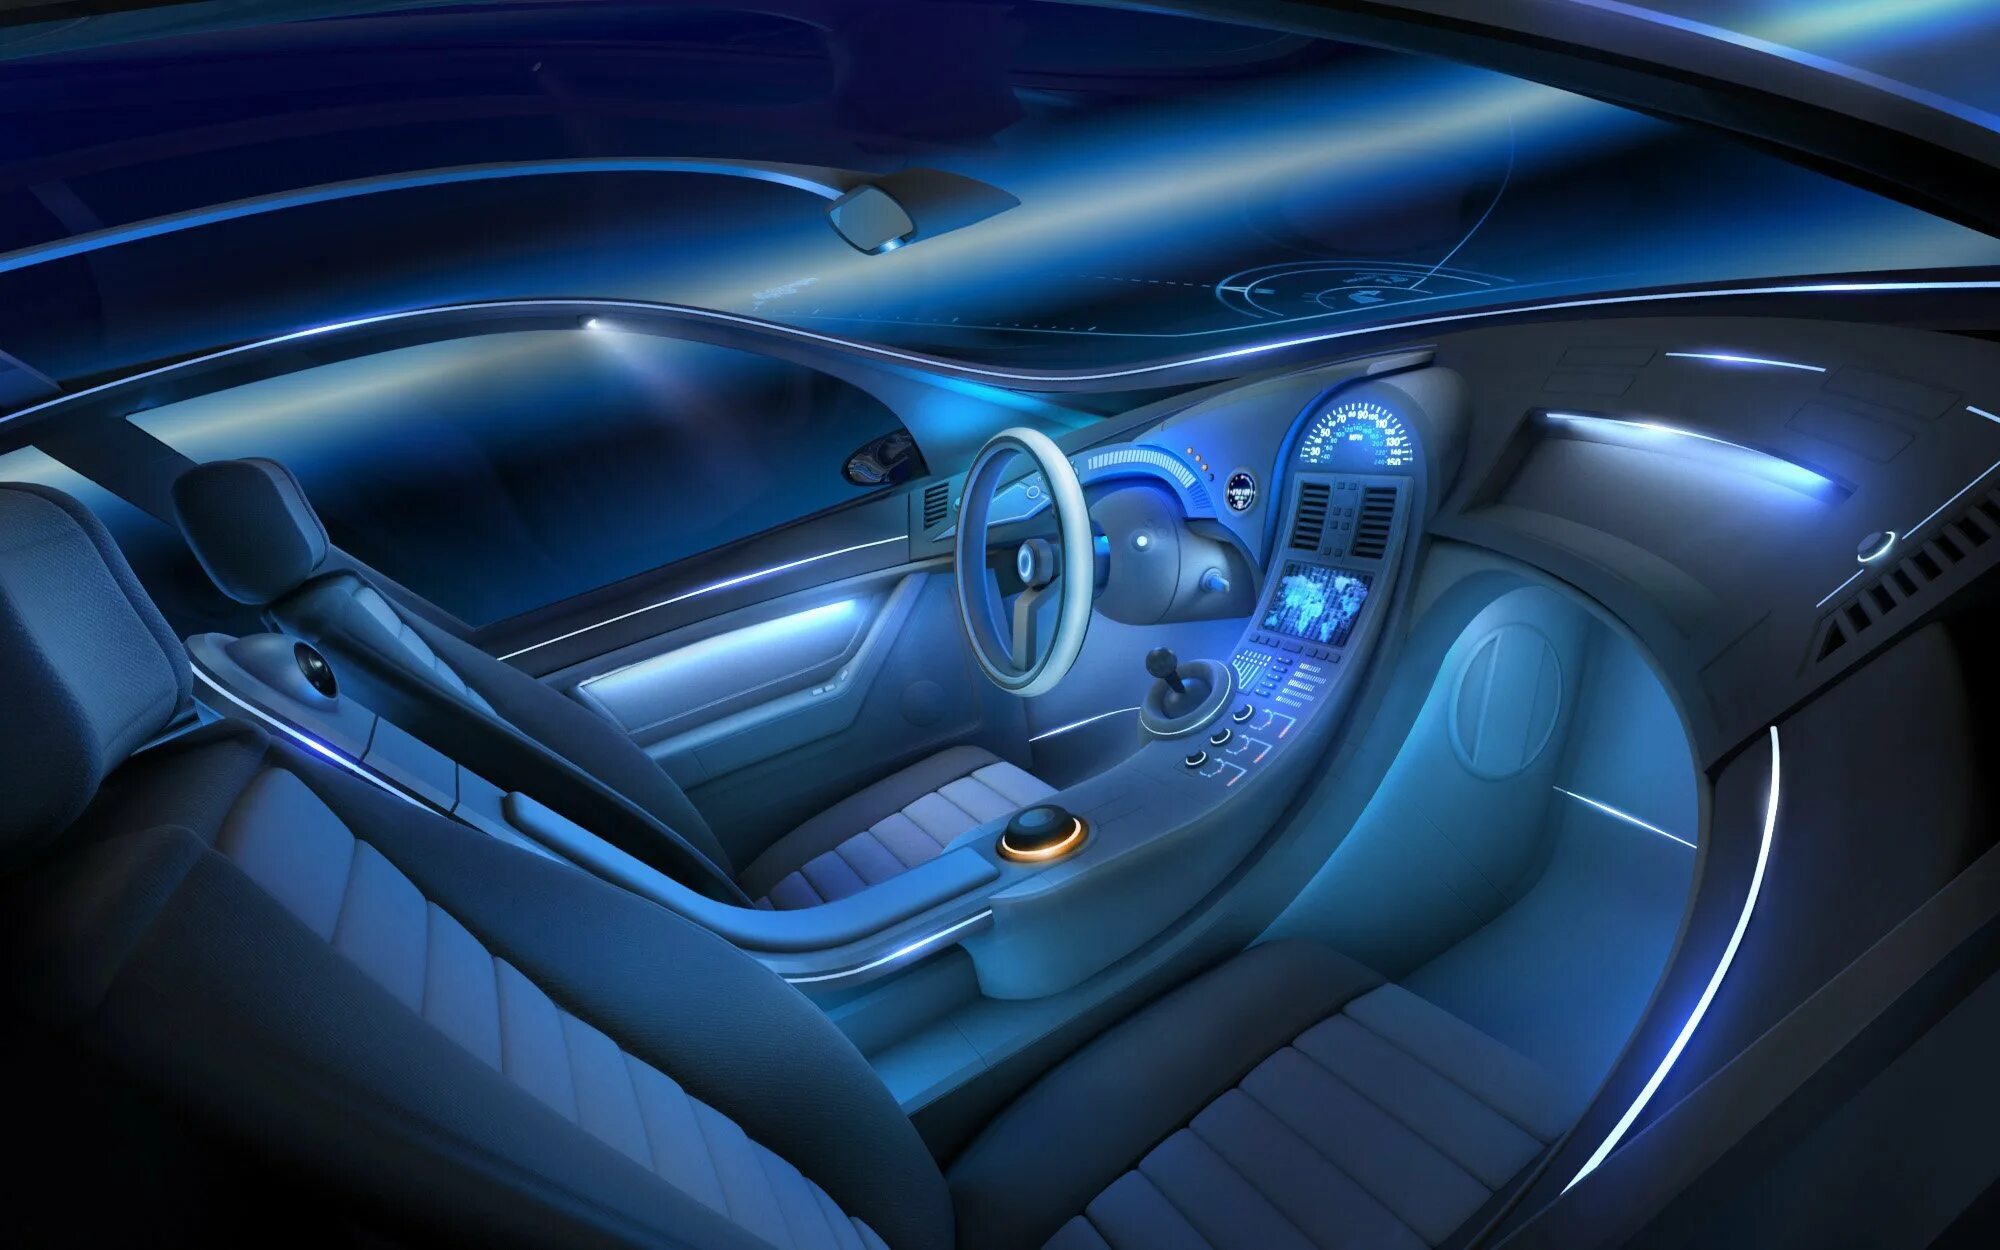 Mercedes Benz w222 салон подсветка. Подсветка салона автомобиля. Красивая подсветка салона автомобиля. Подсветка внутри машины. Инсайд машина